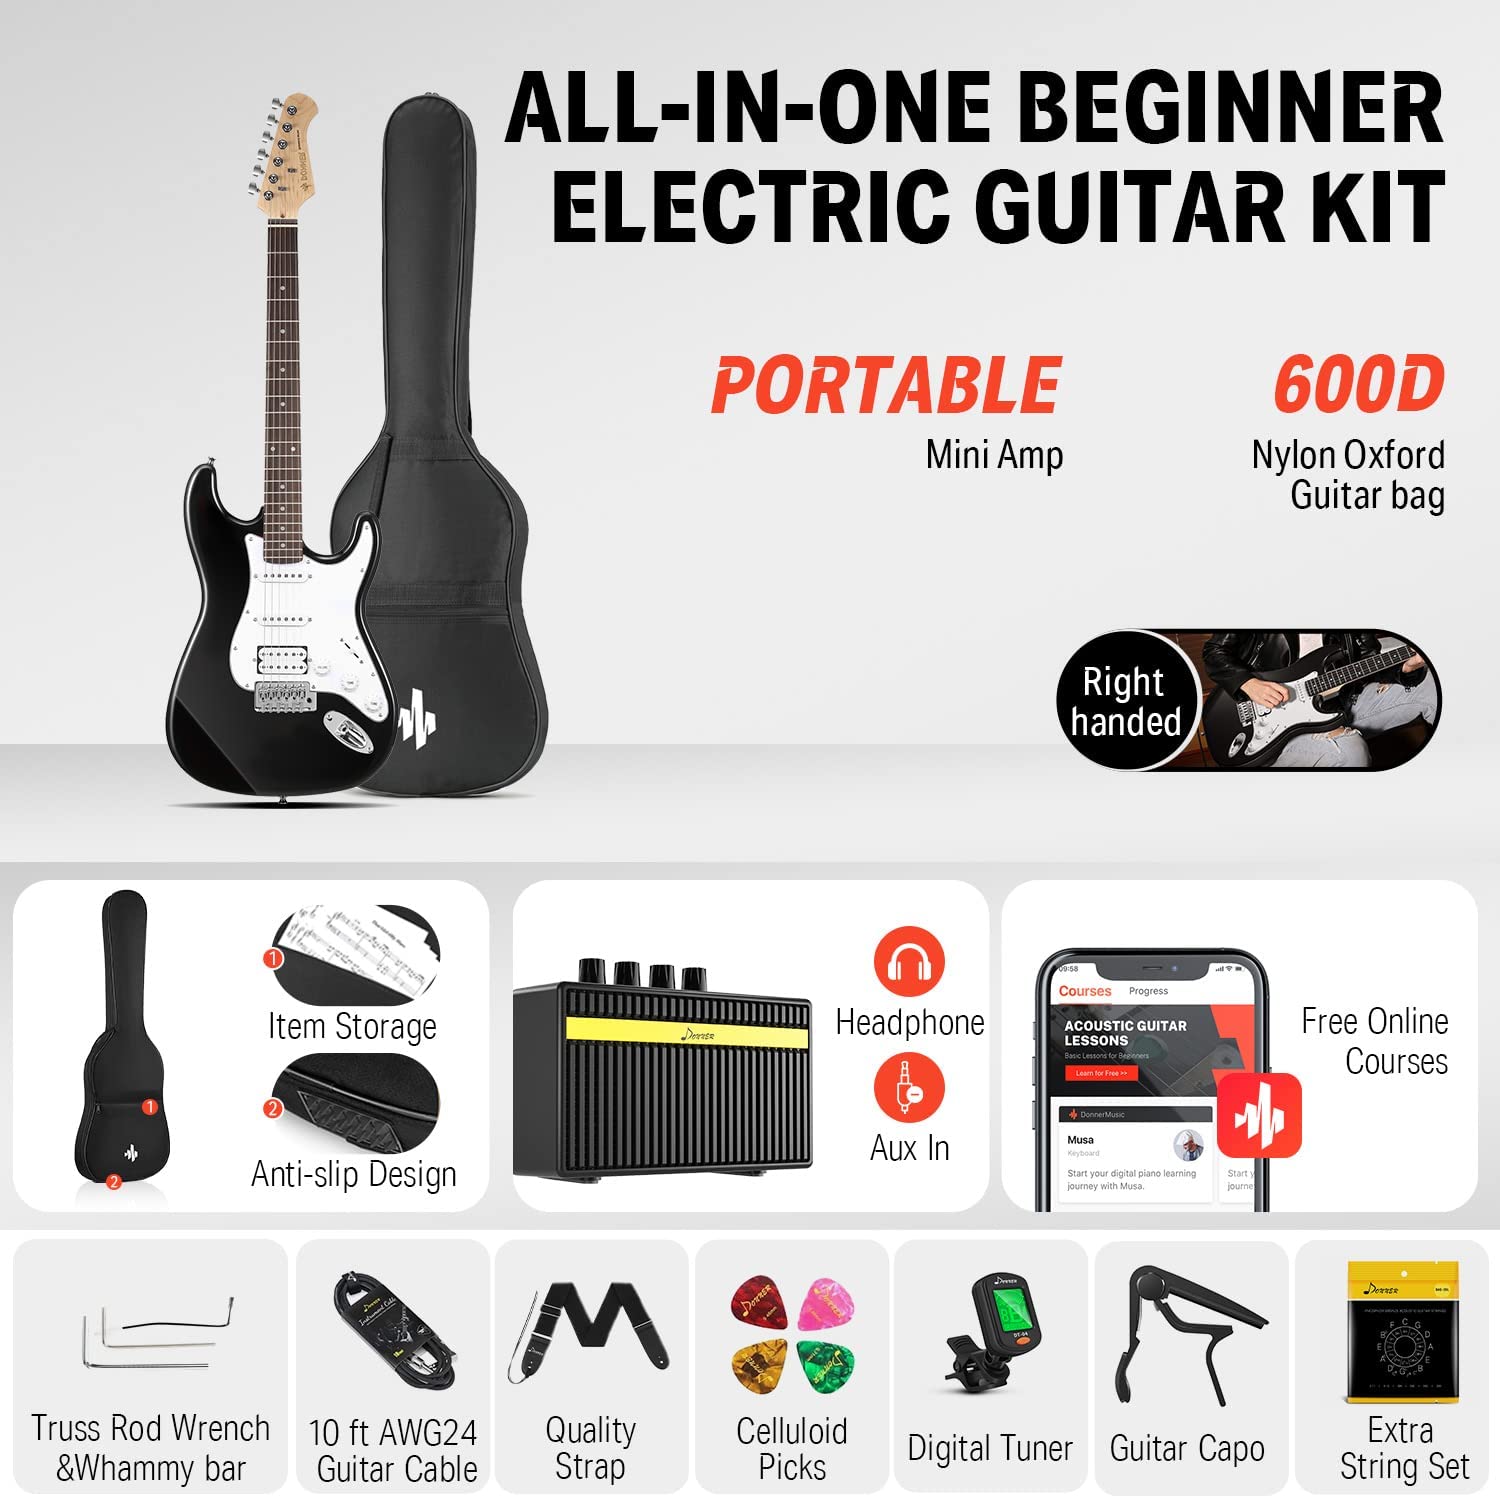 Donner DST-100B 39" Electric Guitar Beginner Kit Solid Body Full Size HSS for Starter, with Amplifier, Bag, Digital Tuner, Capo, Strap, String, Cable, Picks, Black - image 5 of 11